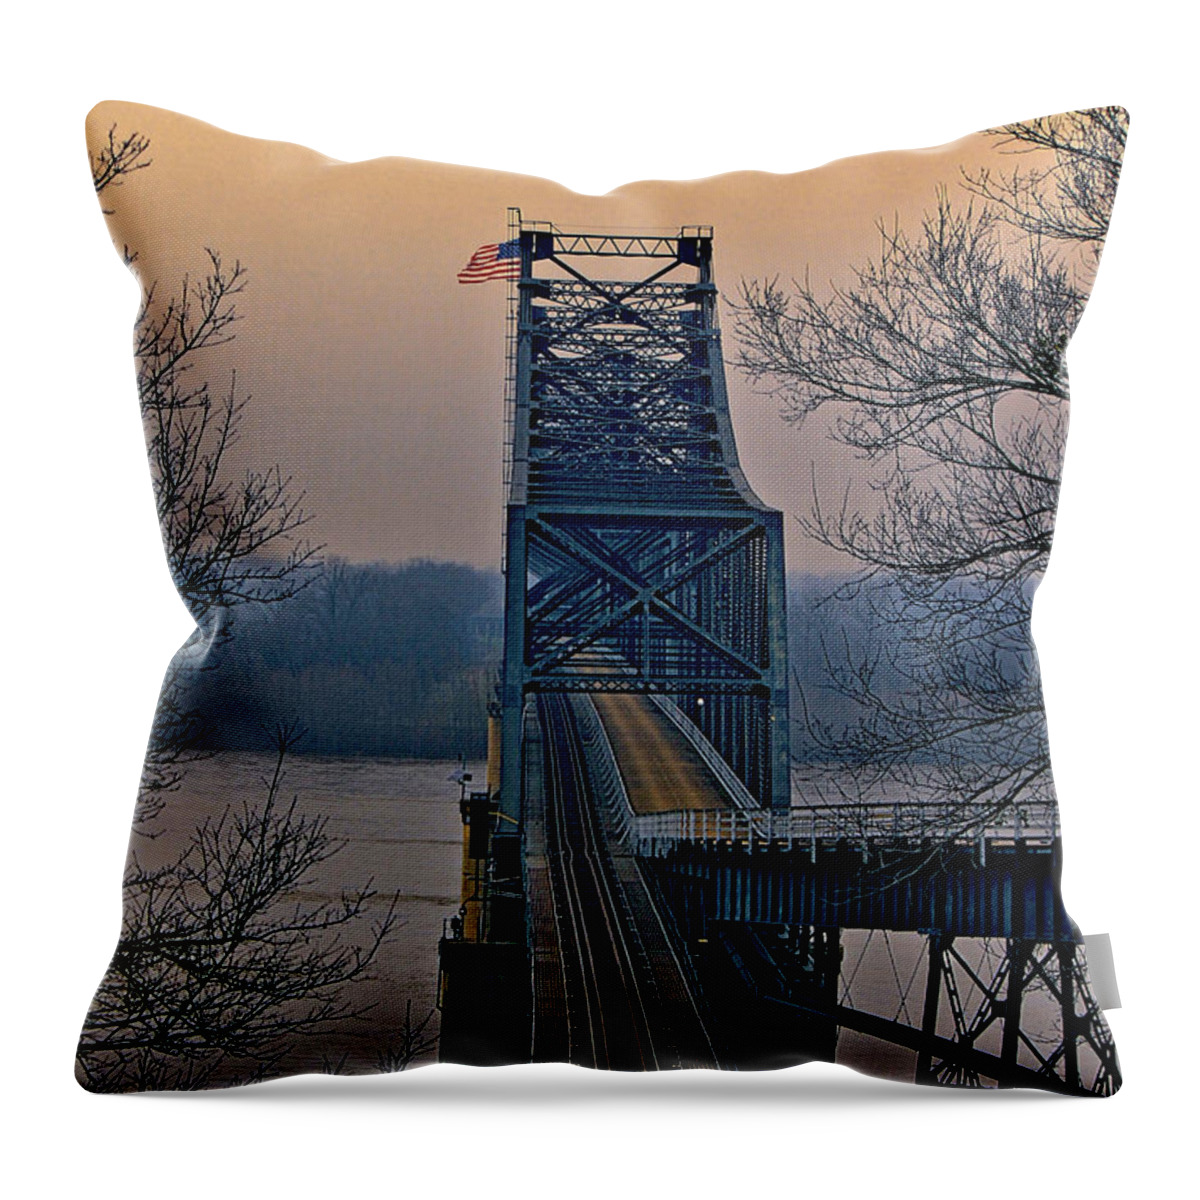 Old Vicksberg Bridge Throw Pillow featuring the digital art Old Vicksberg Bridge of Mississippi by Bonnie Willis